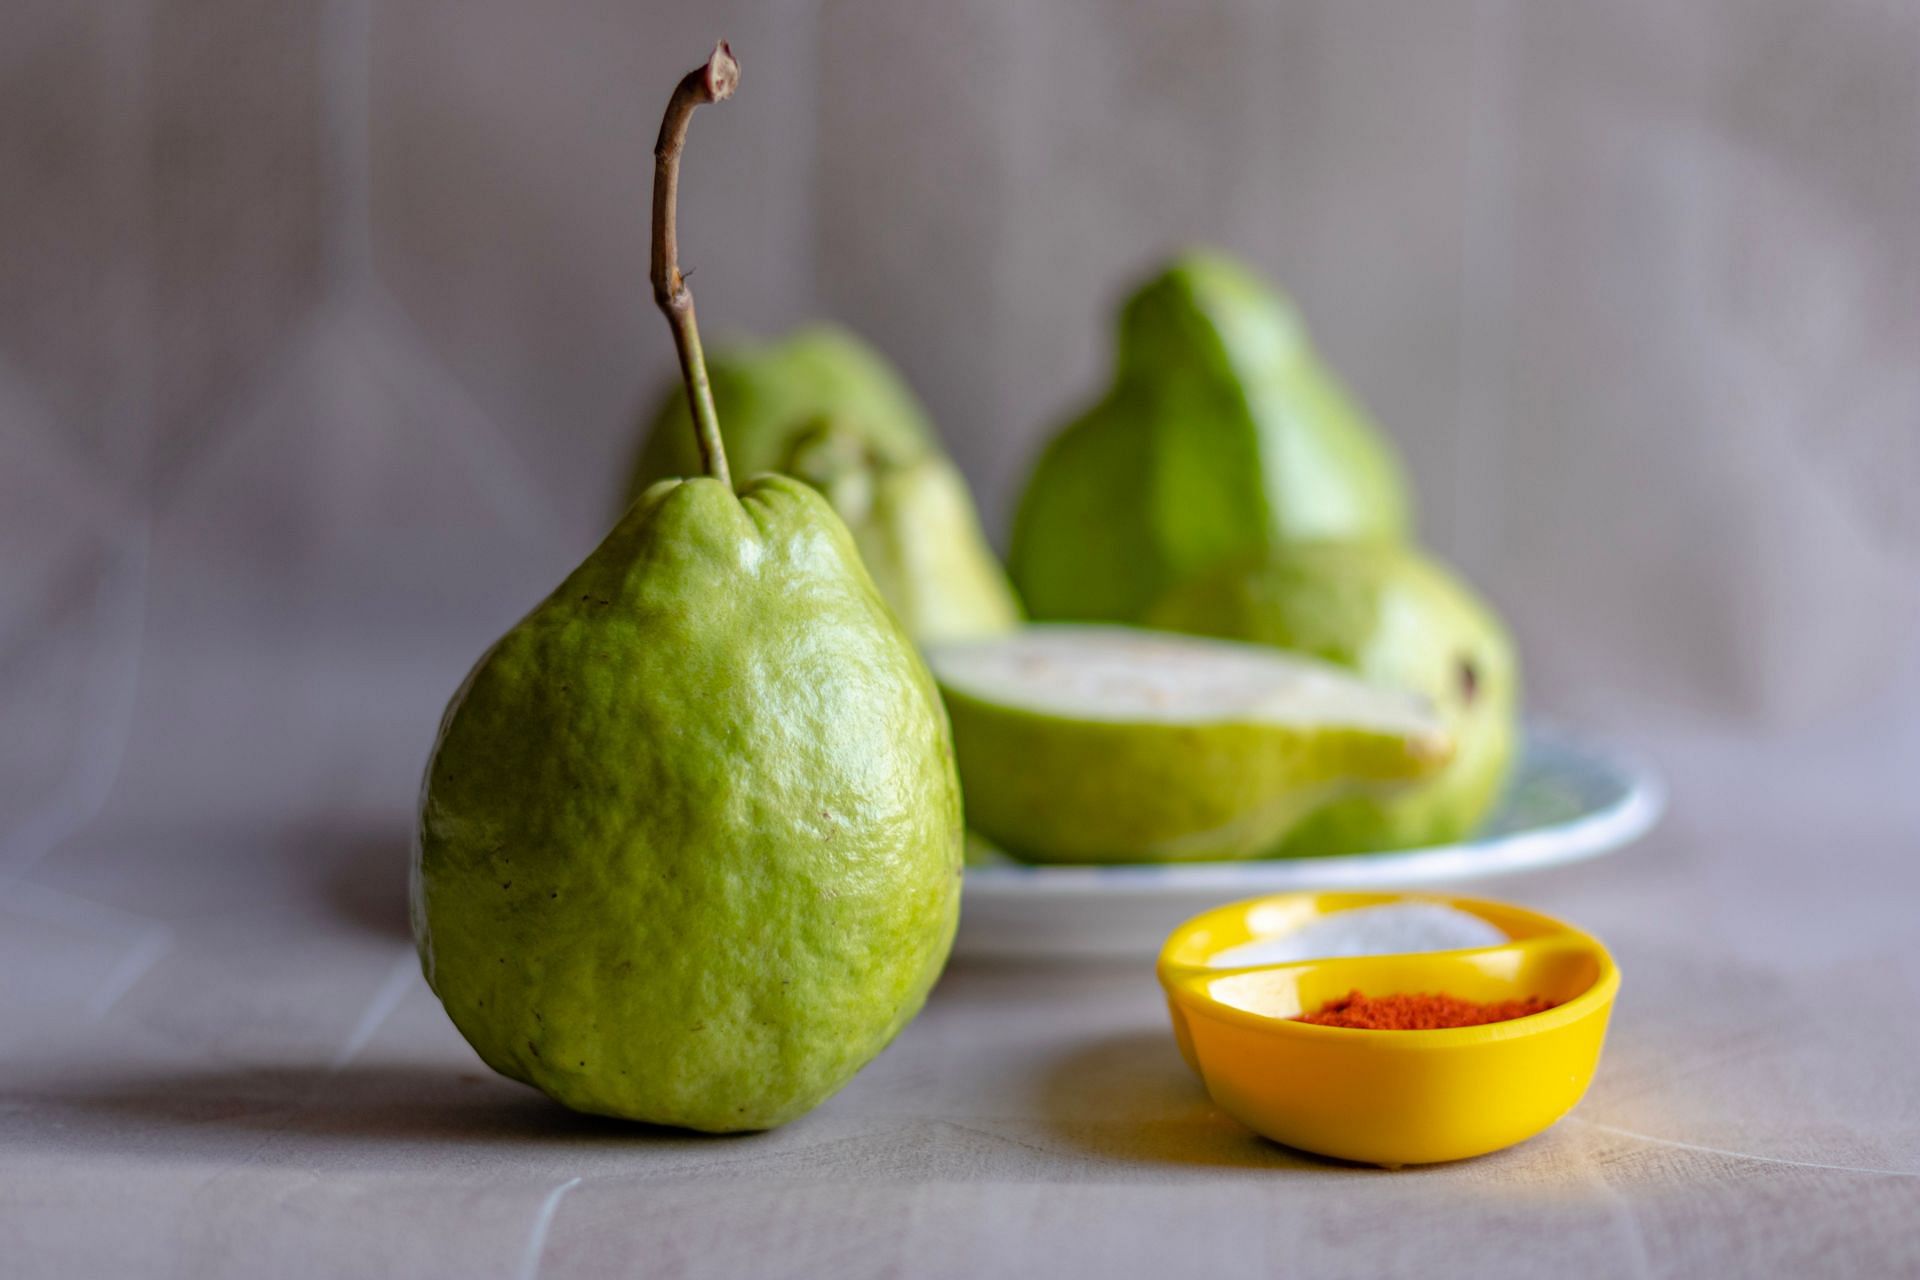 Pears can help improve longevity. (Image via Unsplash/VD Photography)